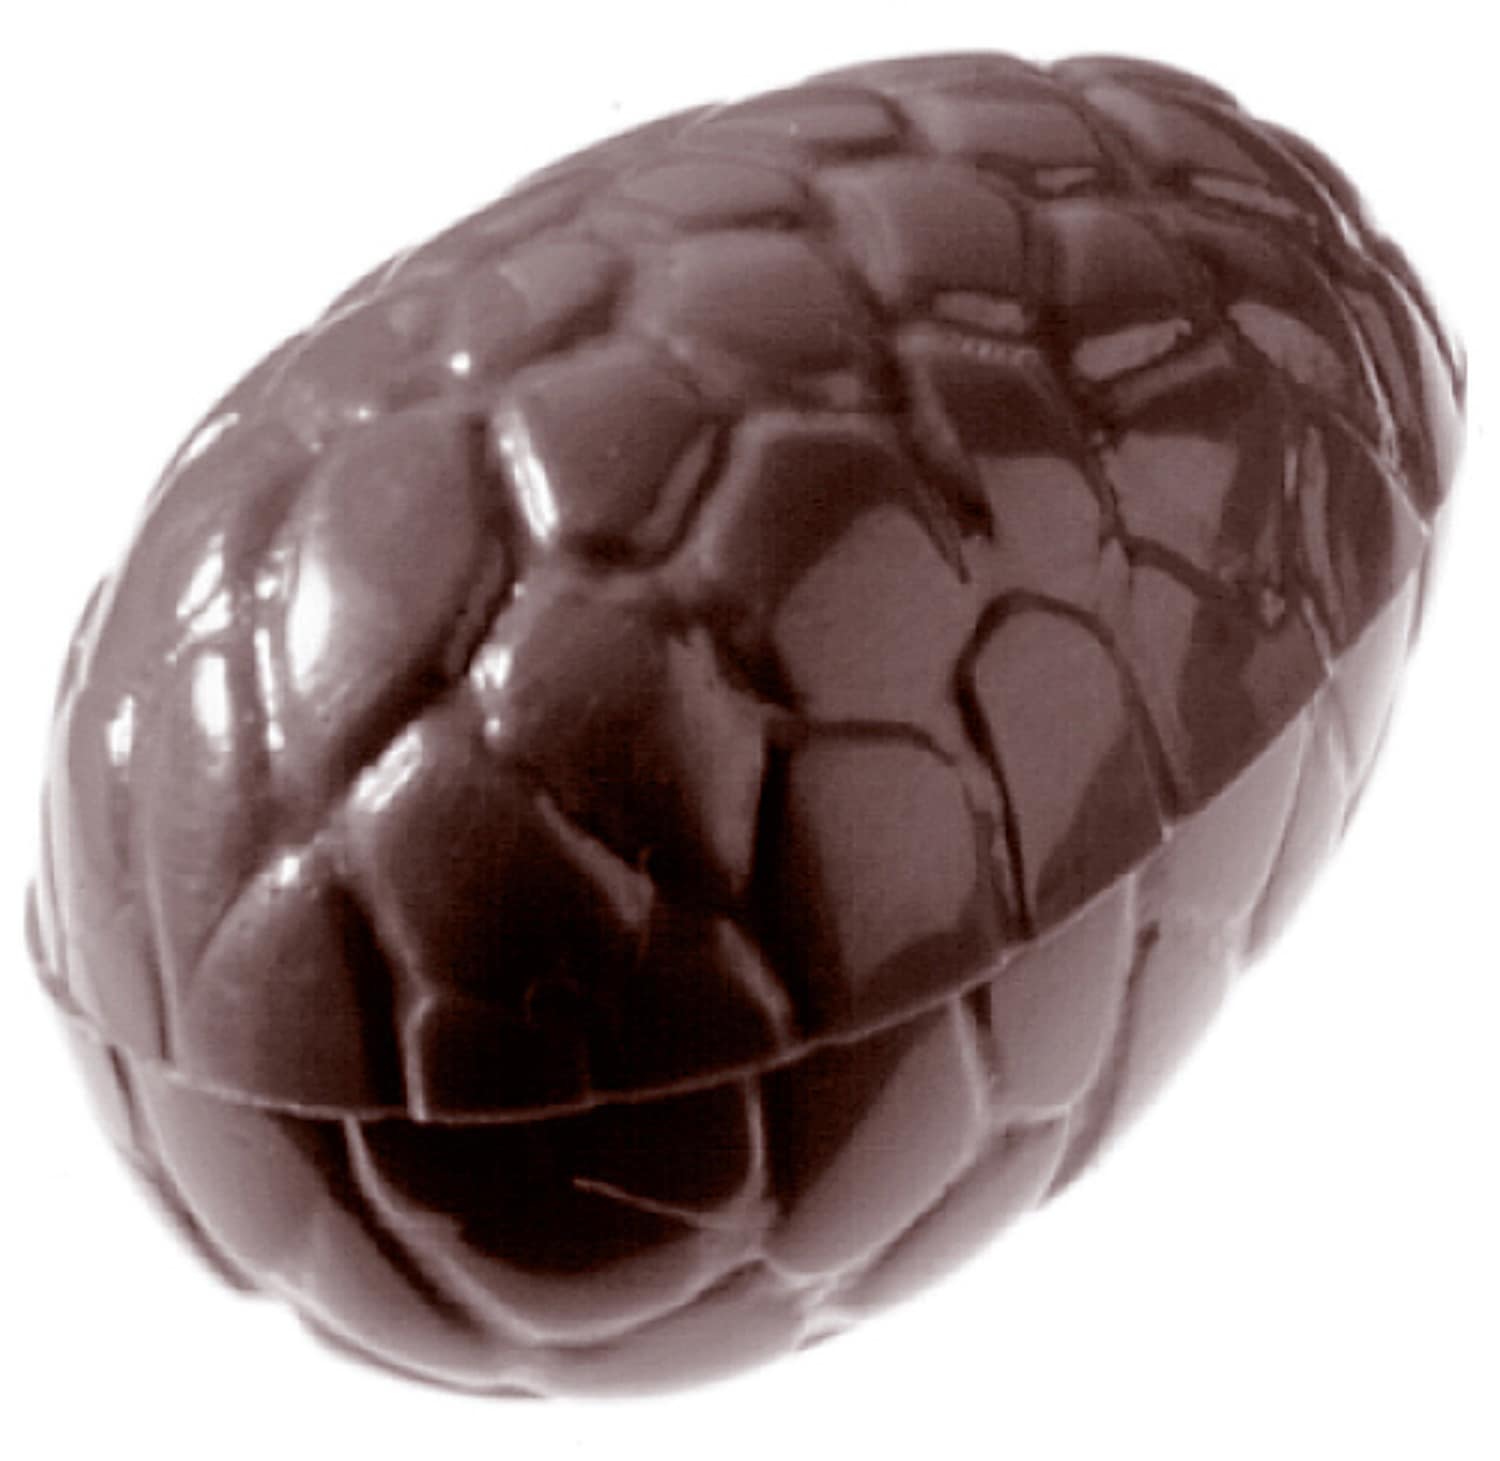 Schokoladenform "Osterei" 421266 421266